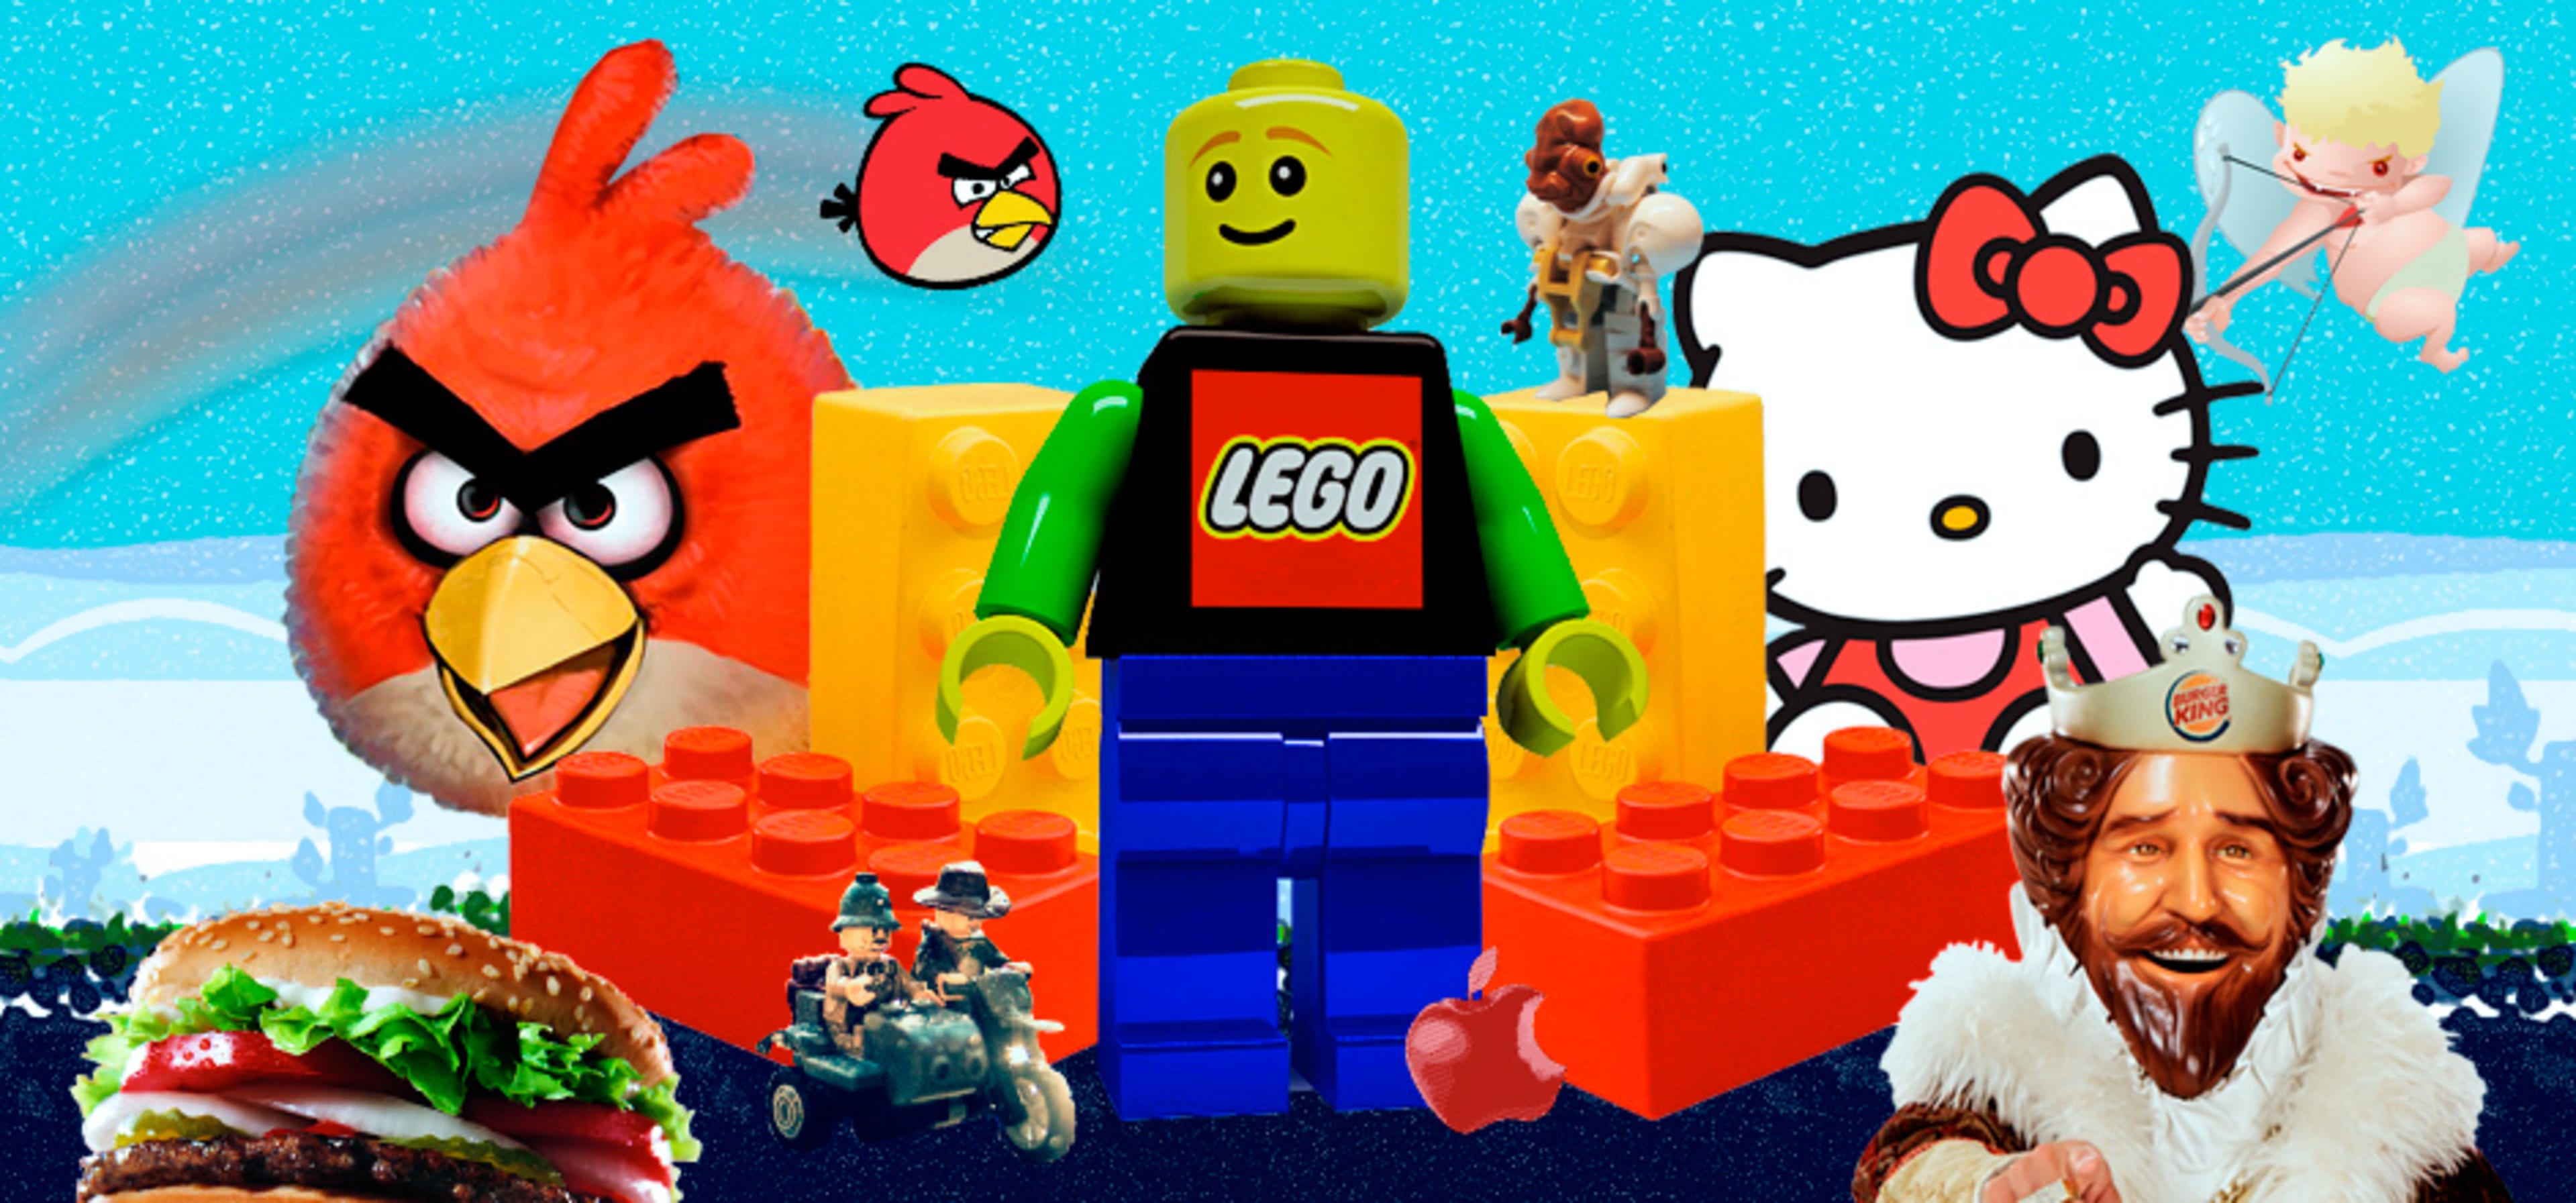 iPhone-Addicted Lego Lover Seeks Same For Fun, Romance, Brand Worship